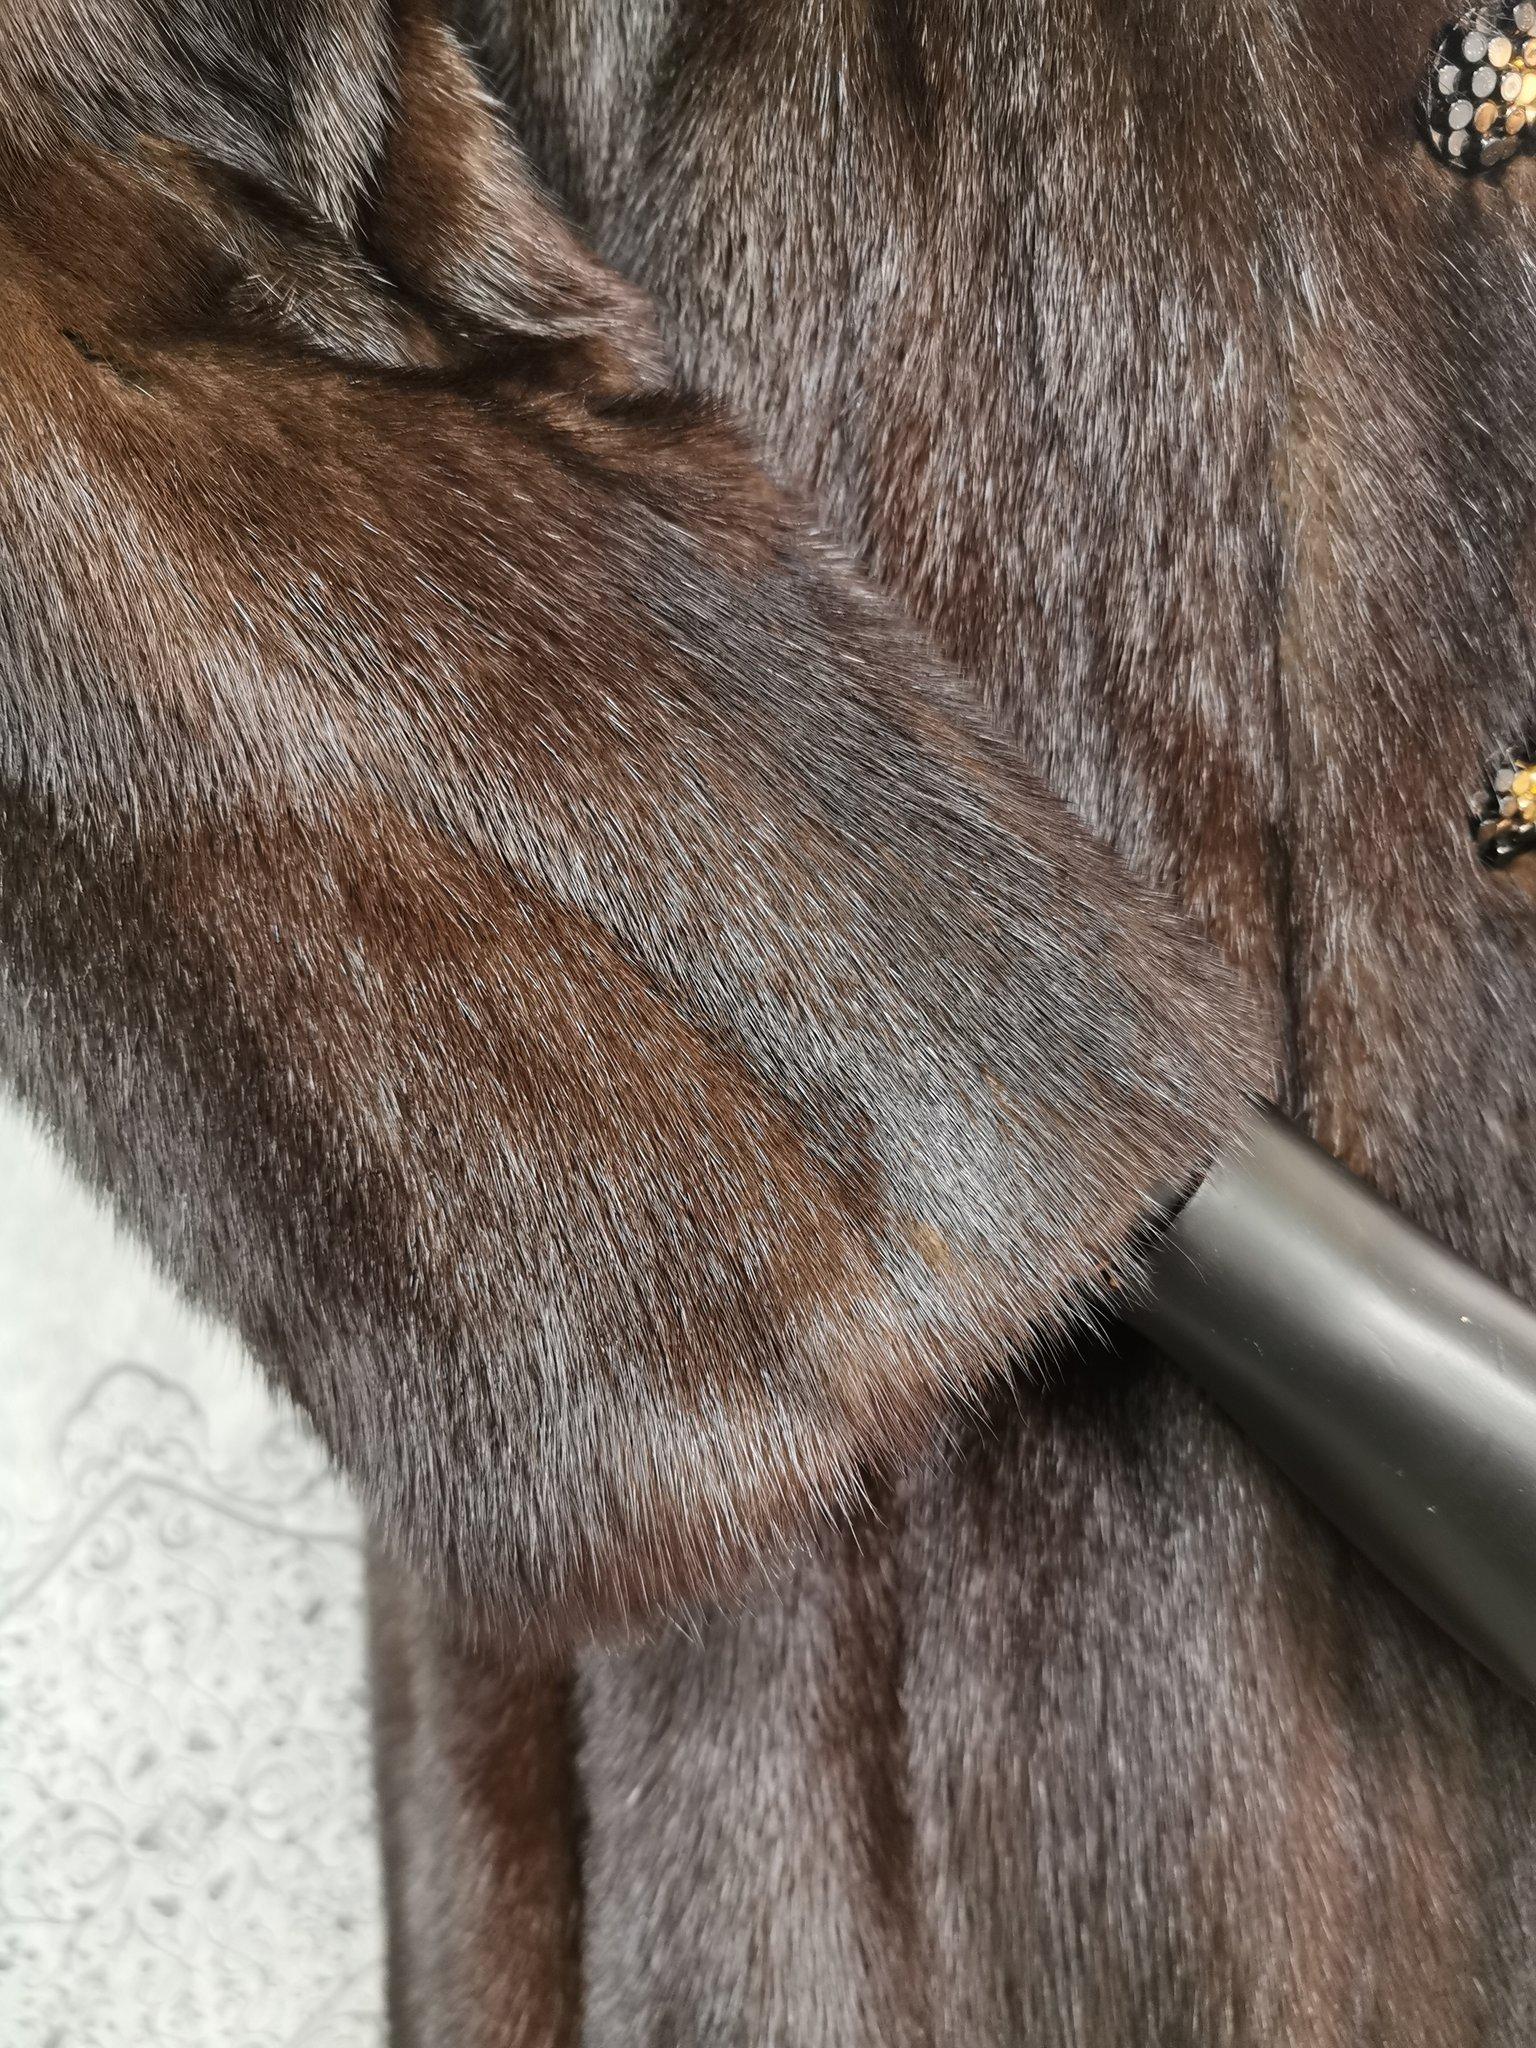 Women's Christian dior / Holt renfrew mink fur coat size 6 For Sale